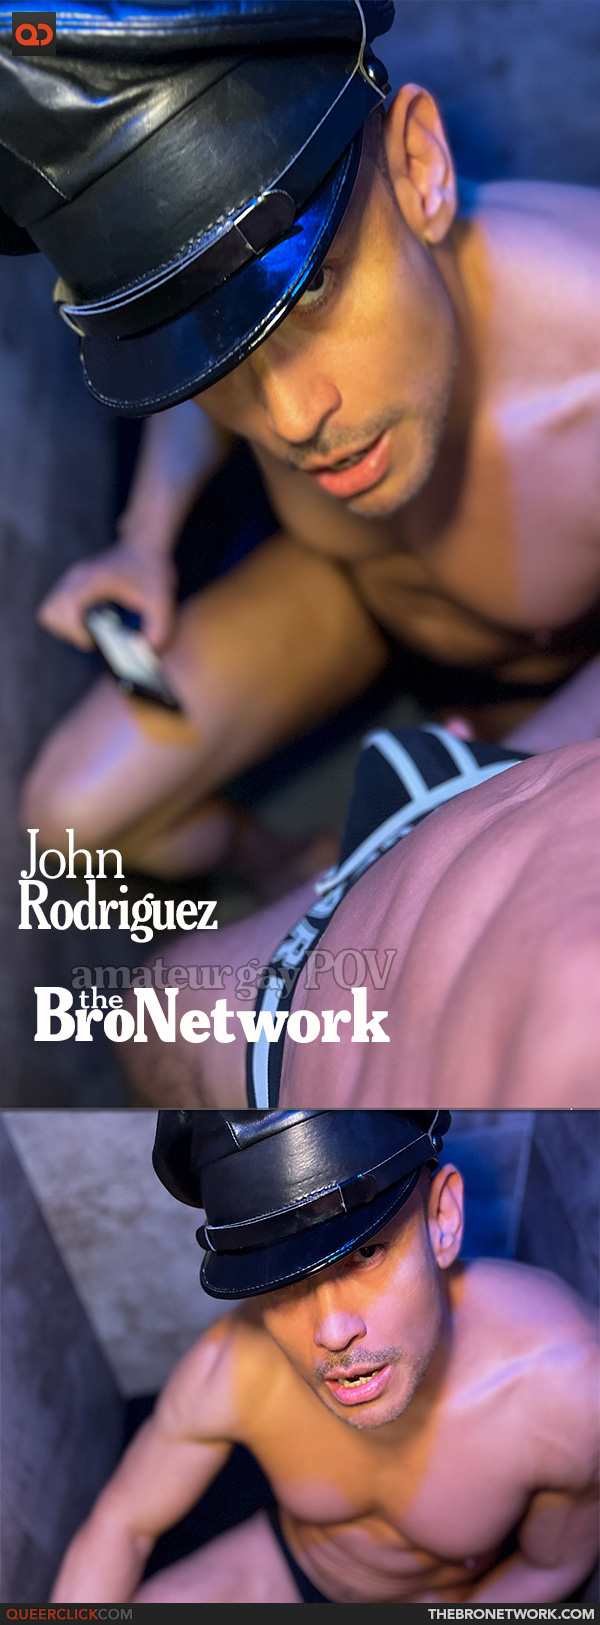 The Bro Network: John Rodriguez